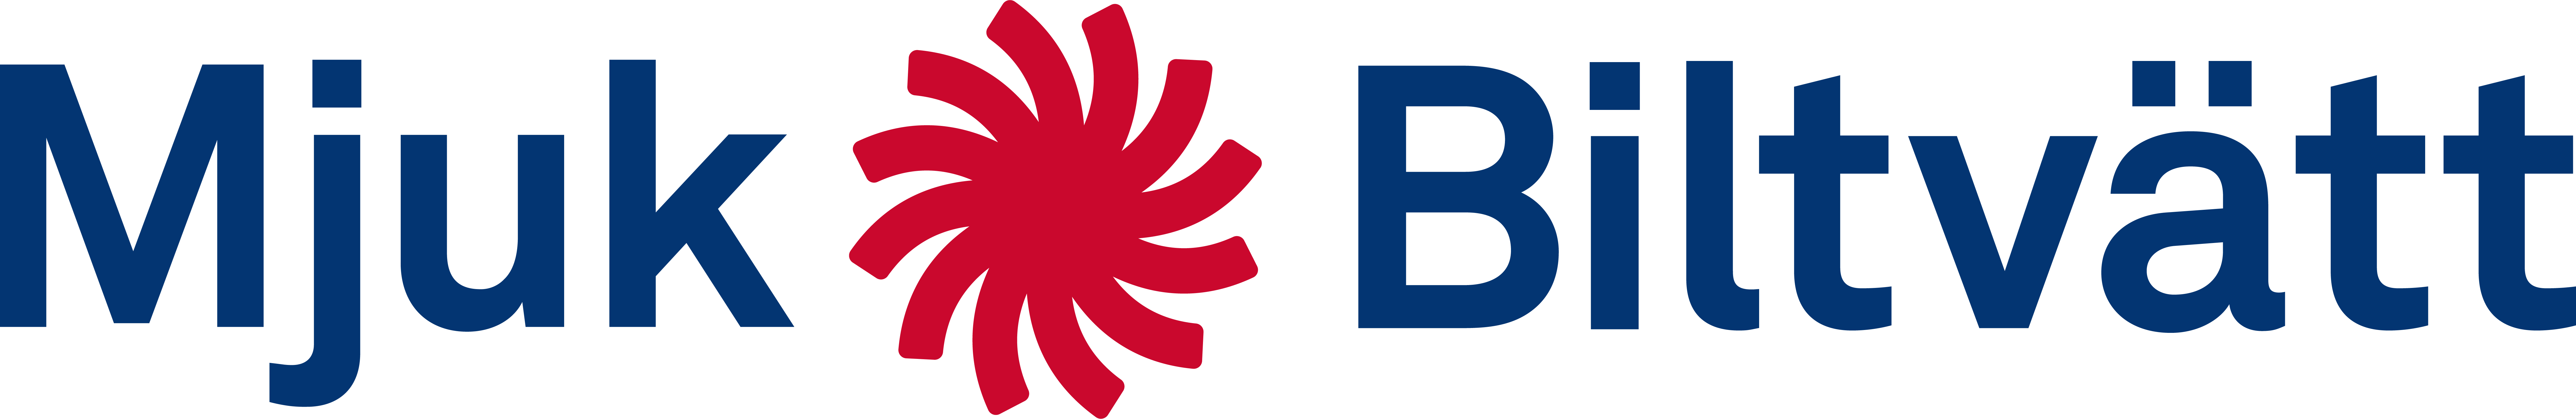 Mjuk Biltvätt Logo Logotyp